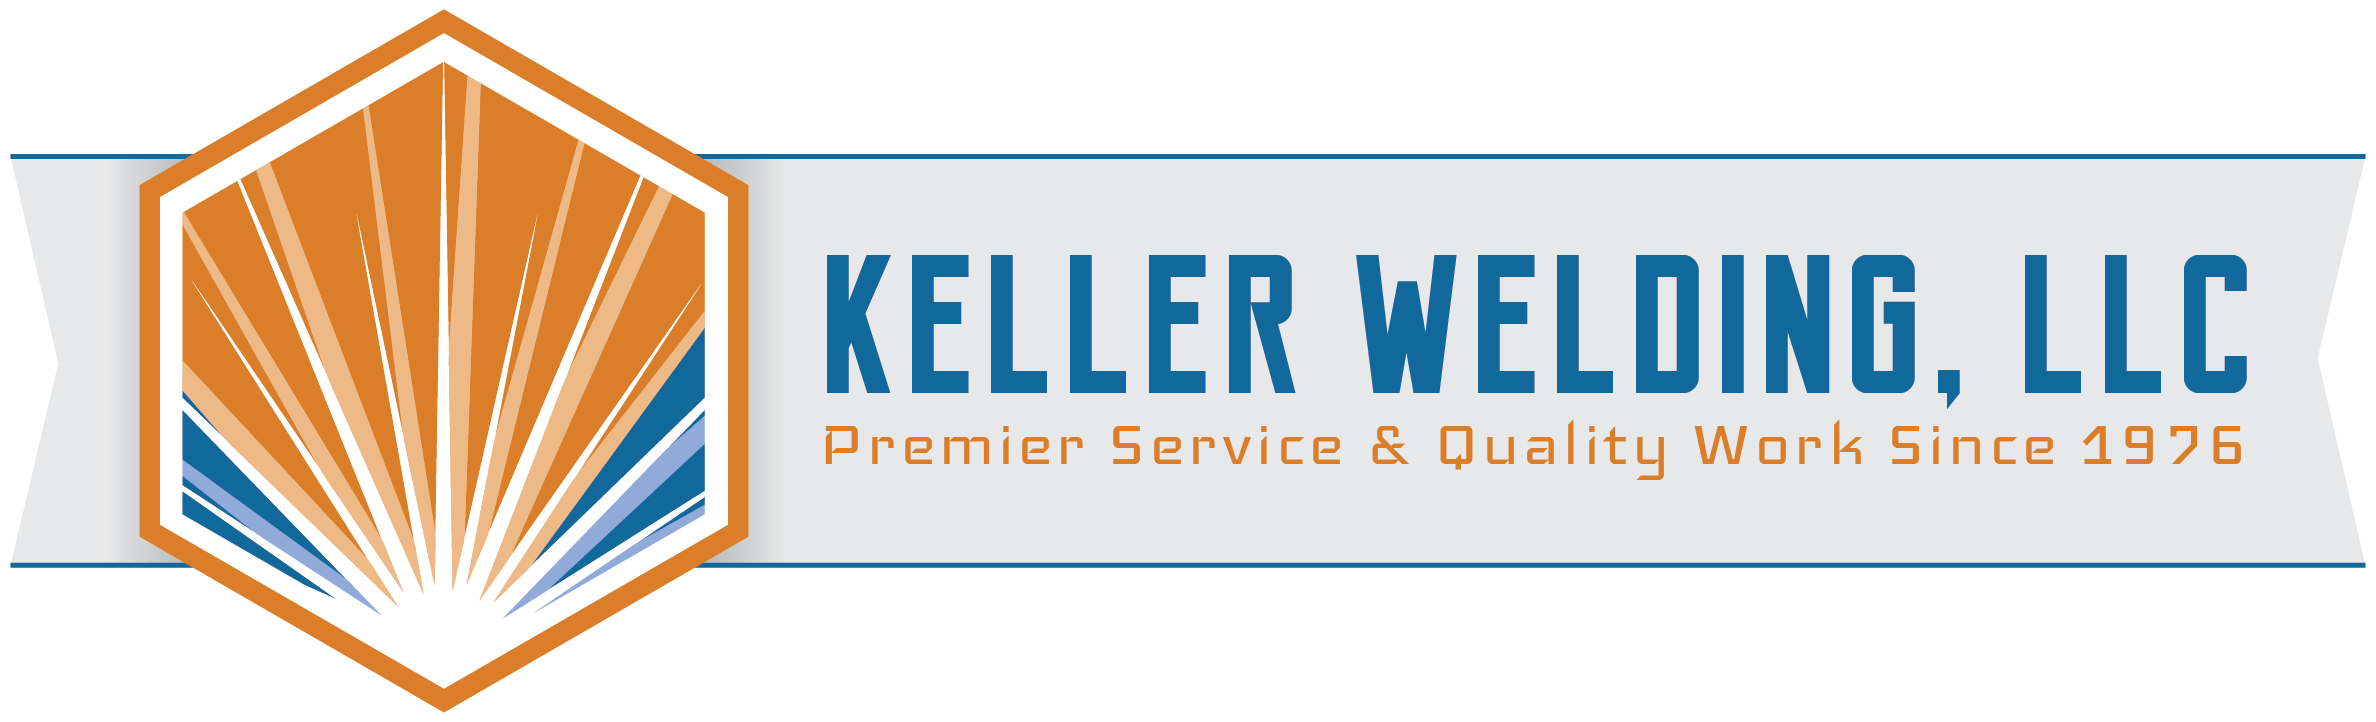 Keller Welding, LLC